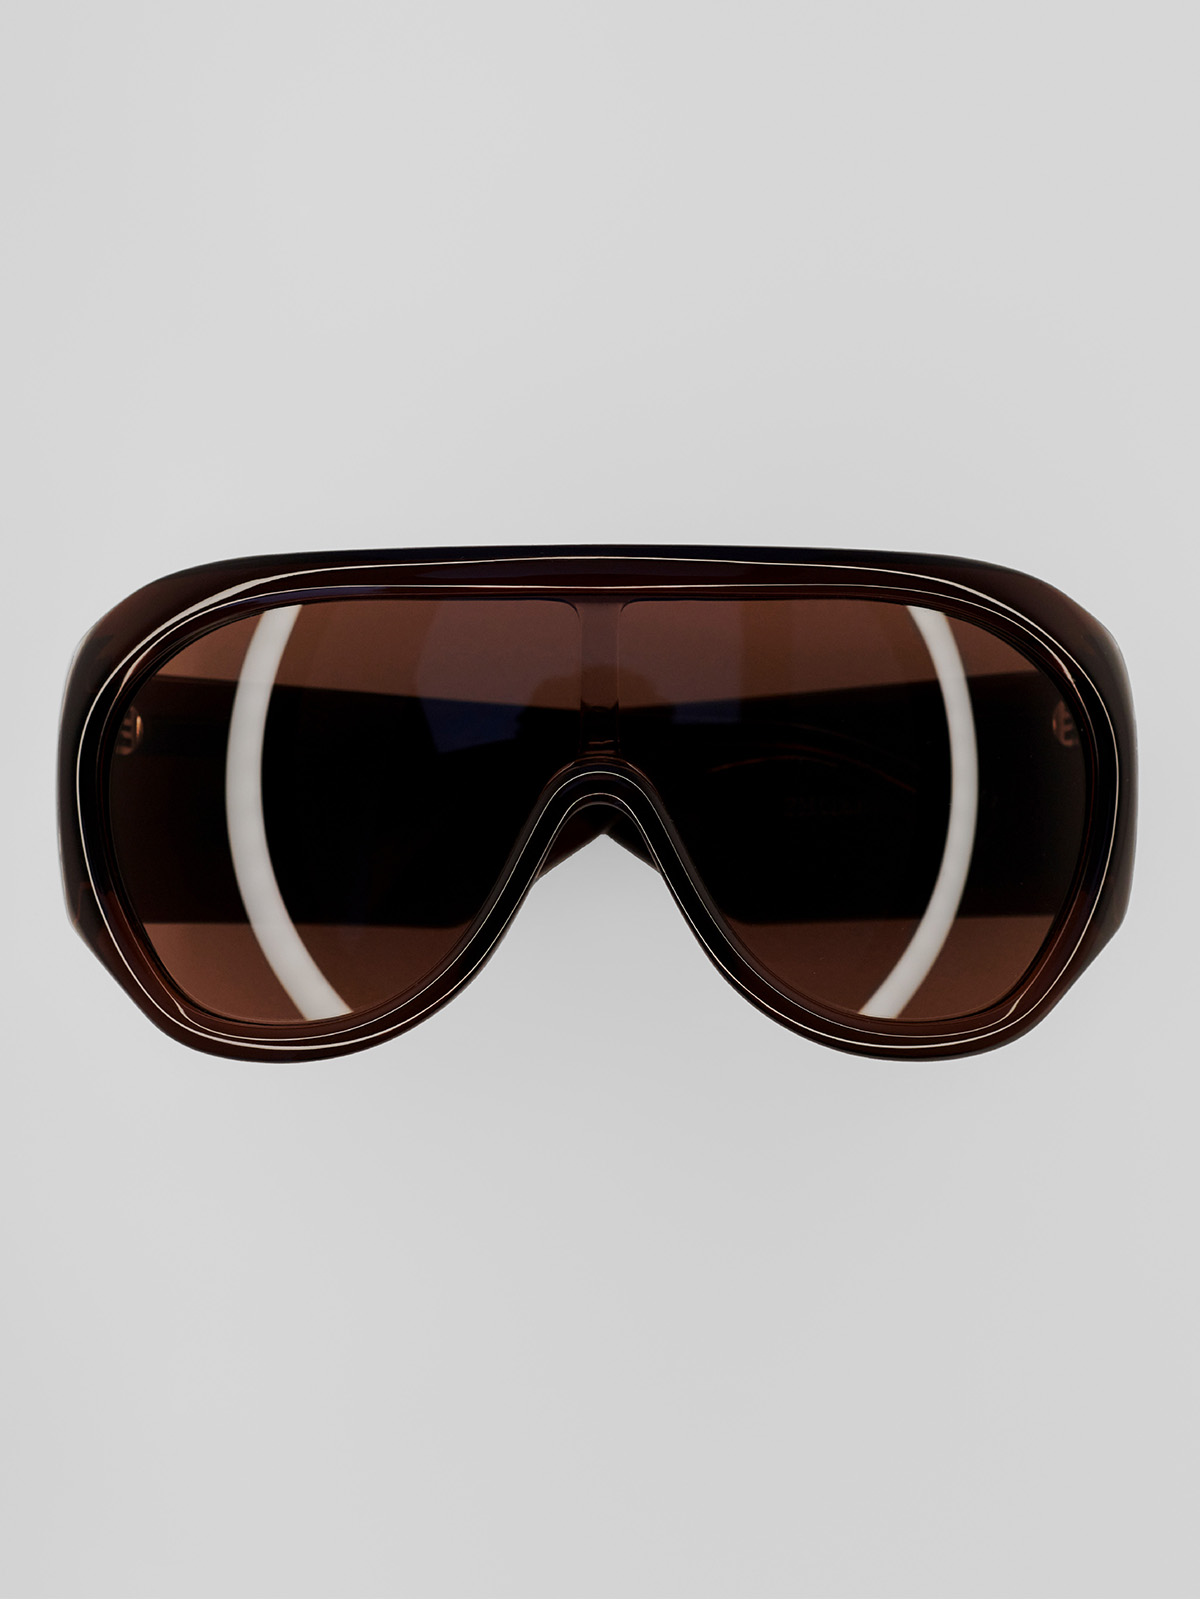 Oversize brown Phoebe Philo sunglasses